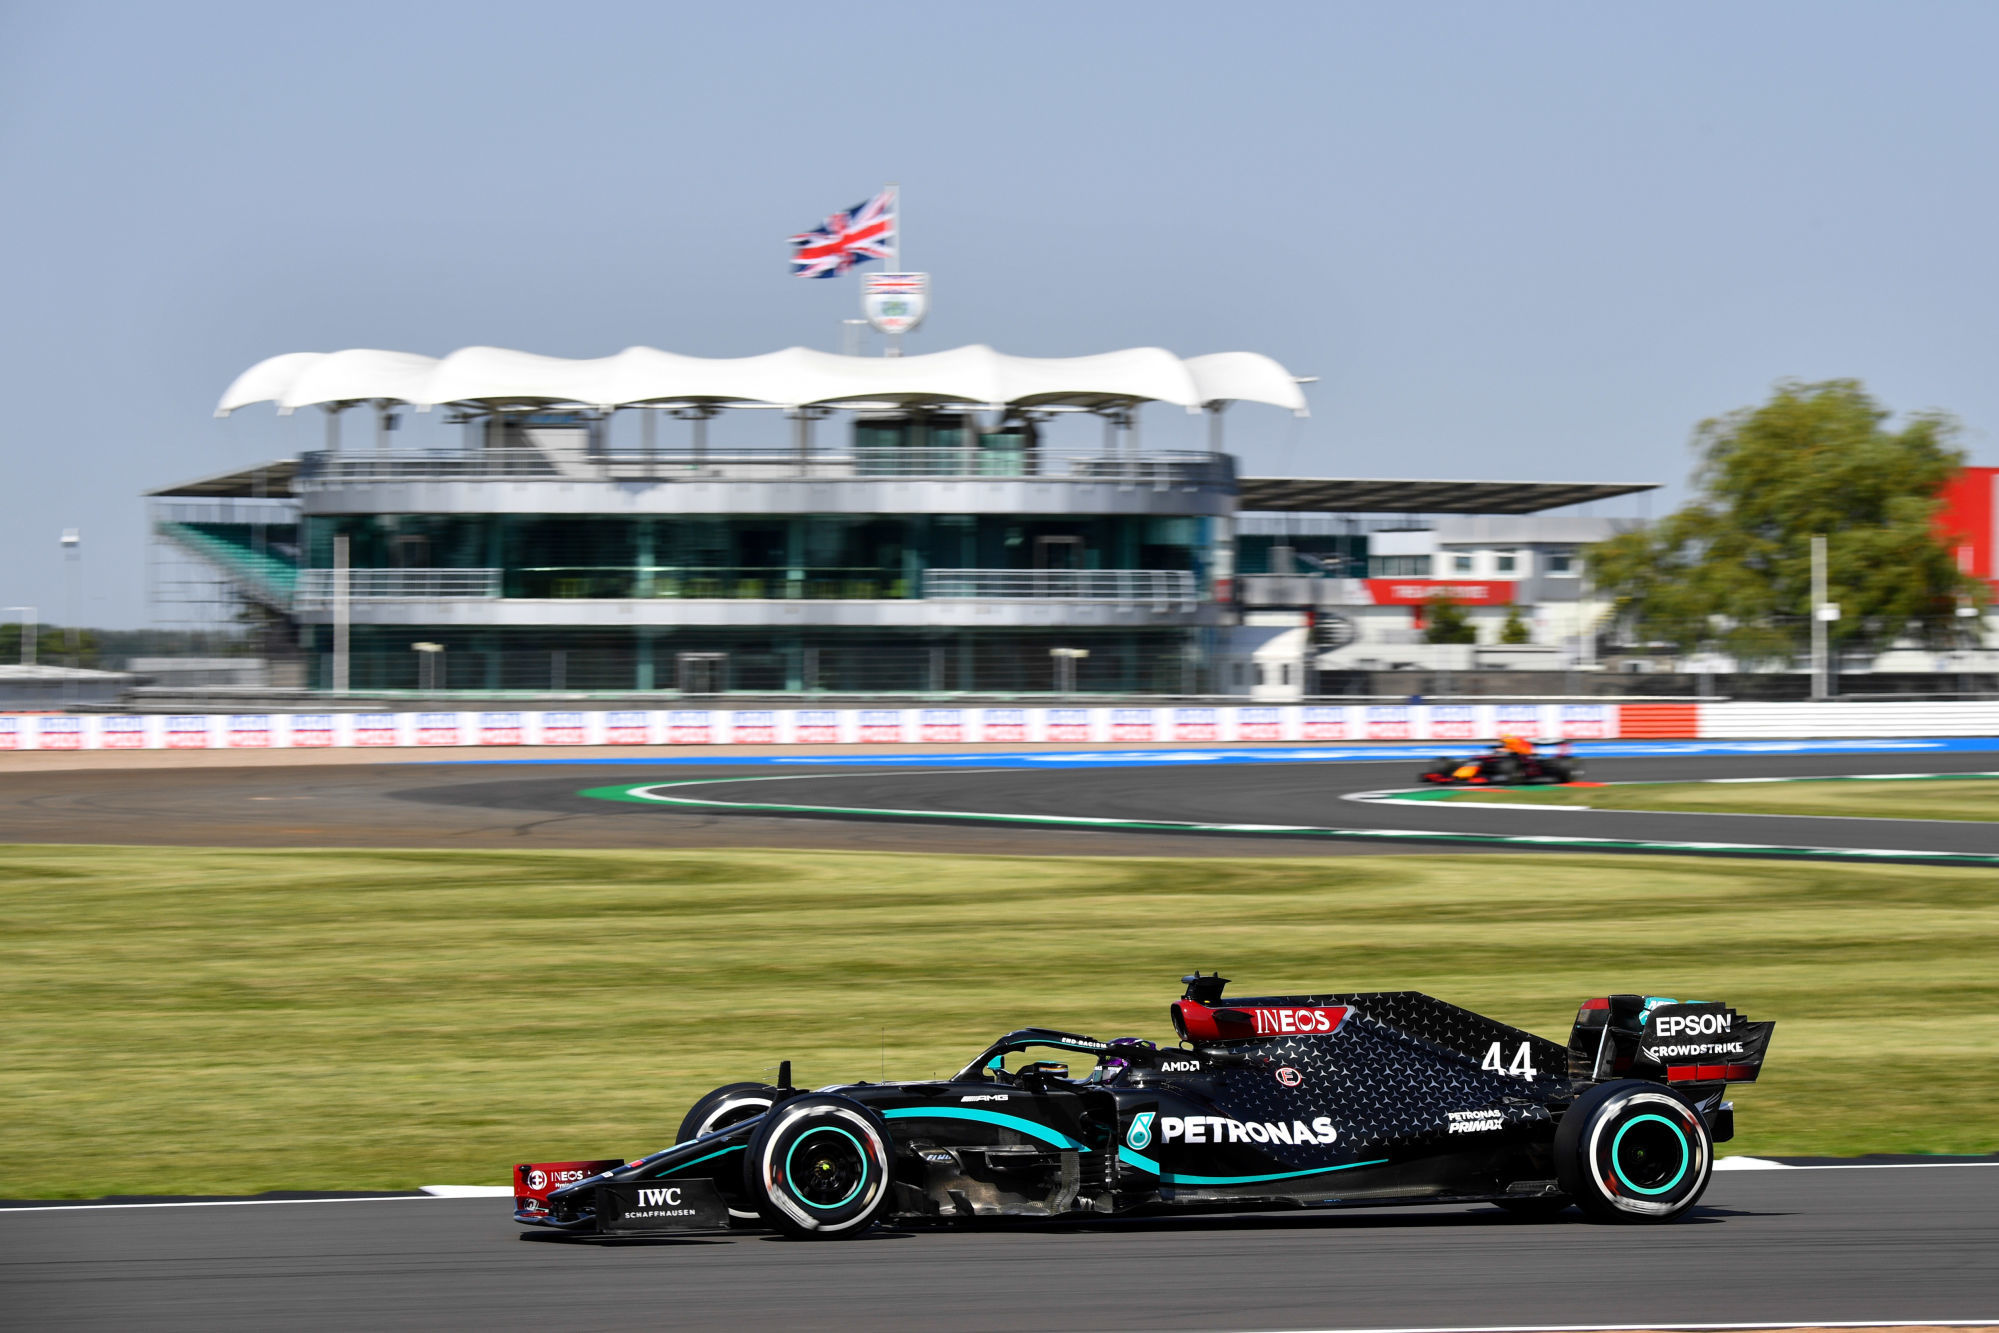 Formule 1 - Lewis Hamilton Grand Prix (GP) de Grande-Bretagne
Photo by Icon Sport